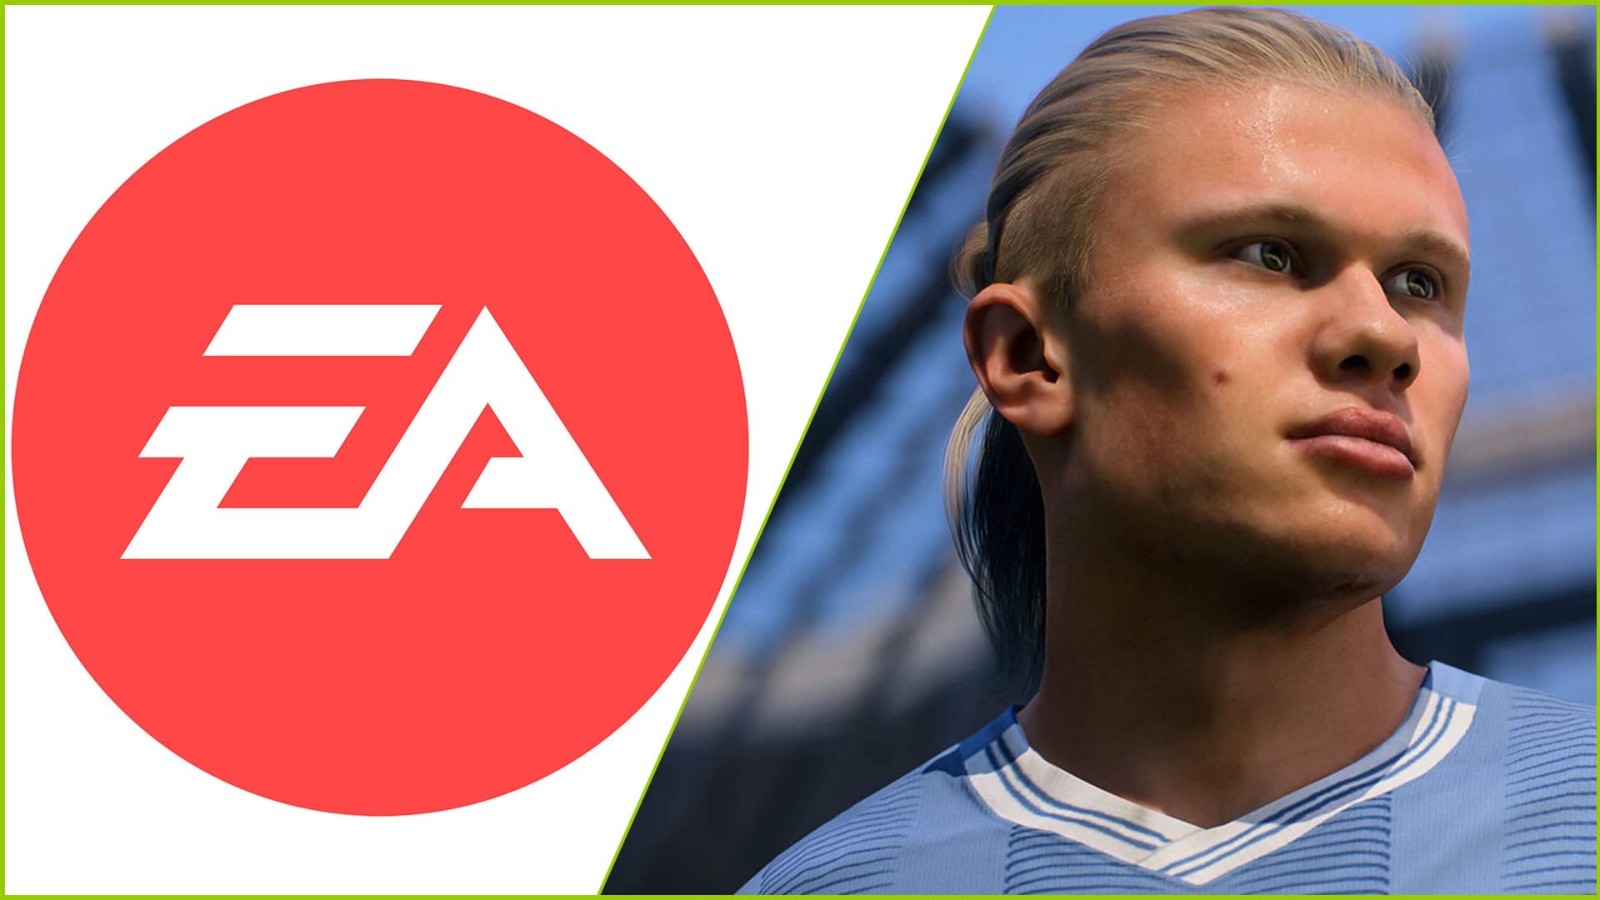 《EA FC 24》活躍用戶達1450萬 為EA帶來強勁成績